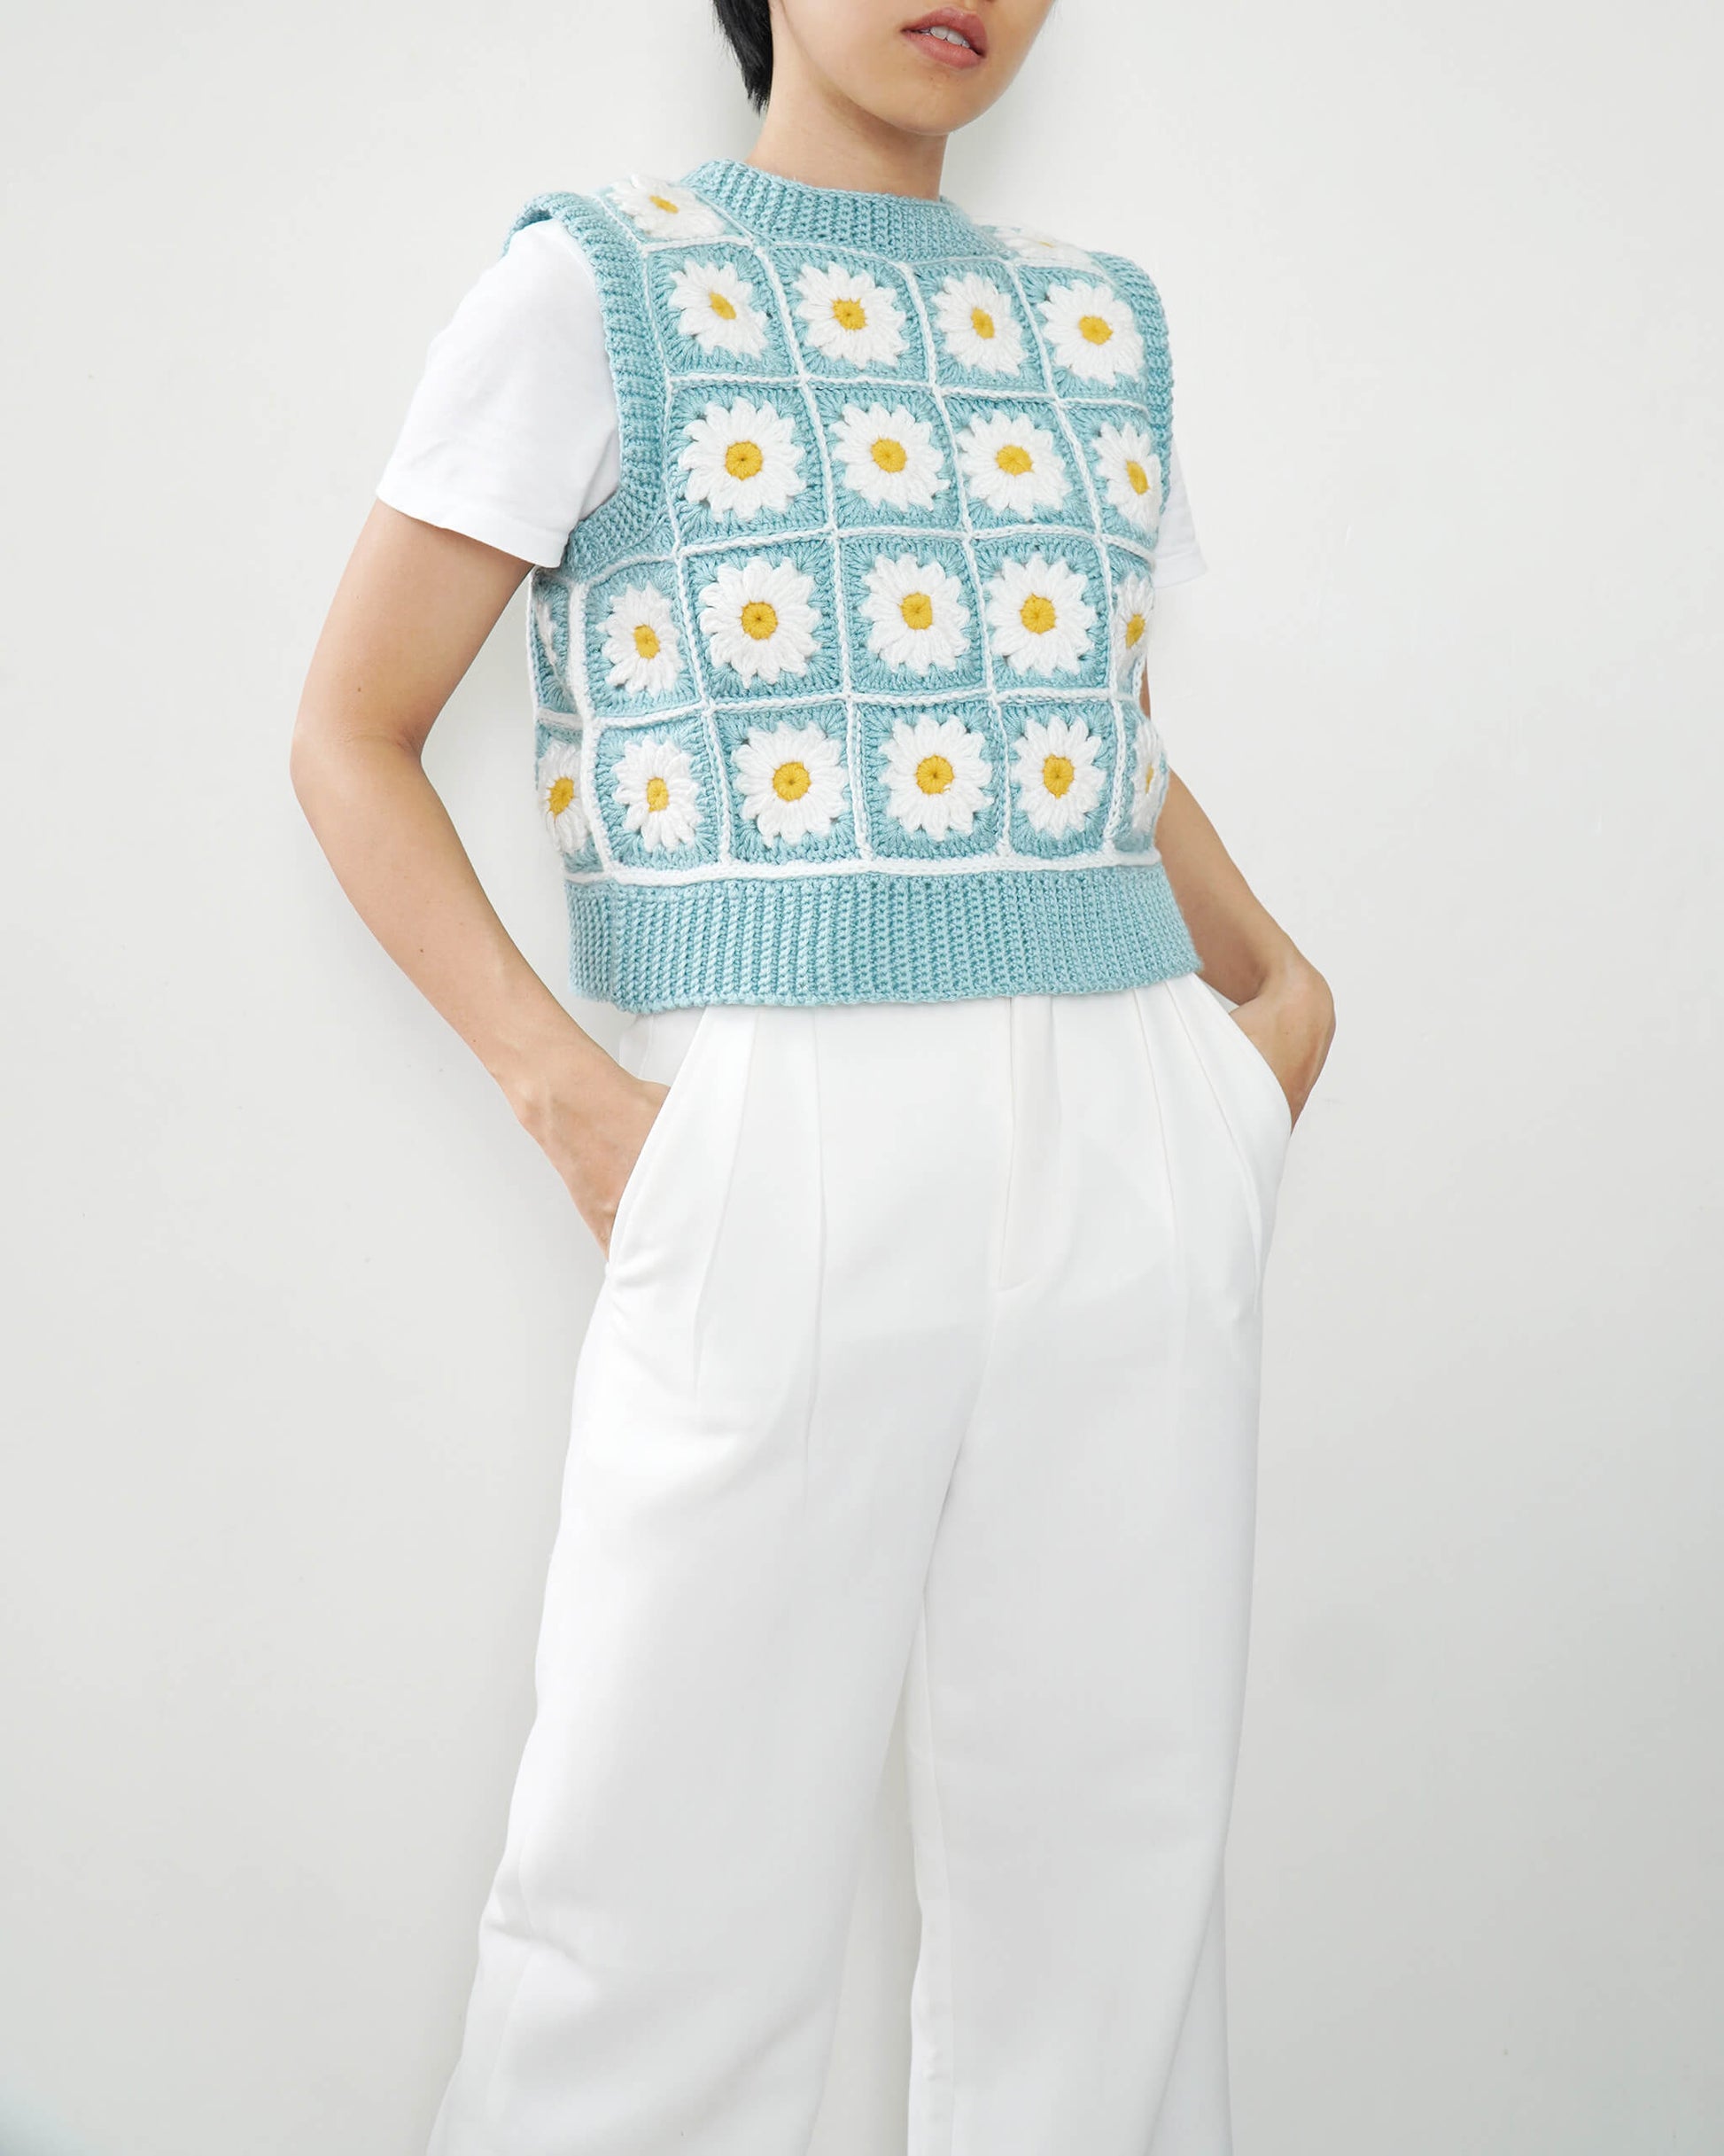 Granny vest crochet pattern